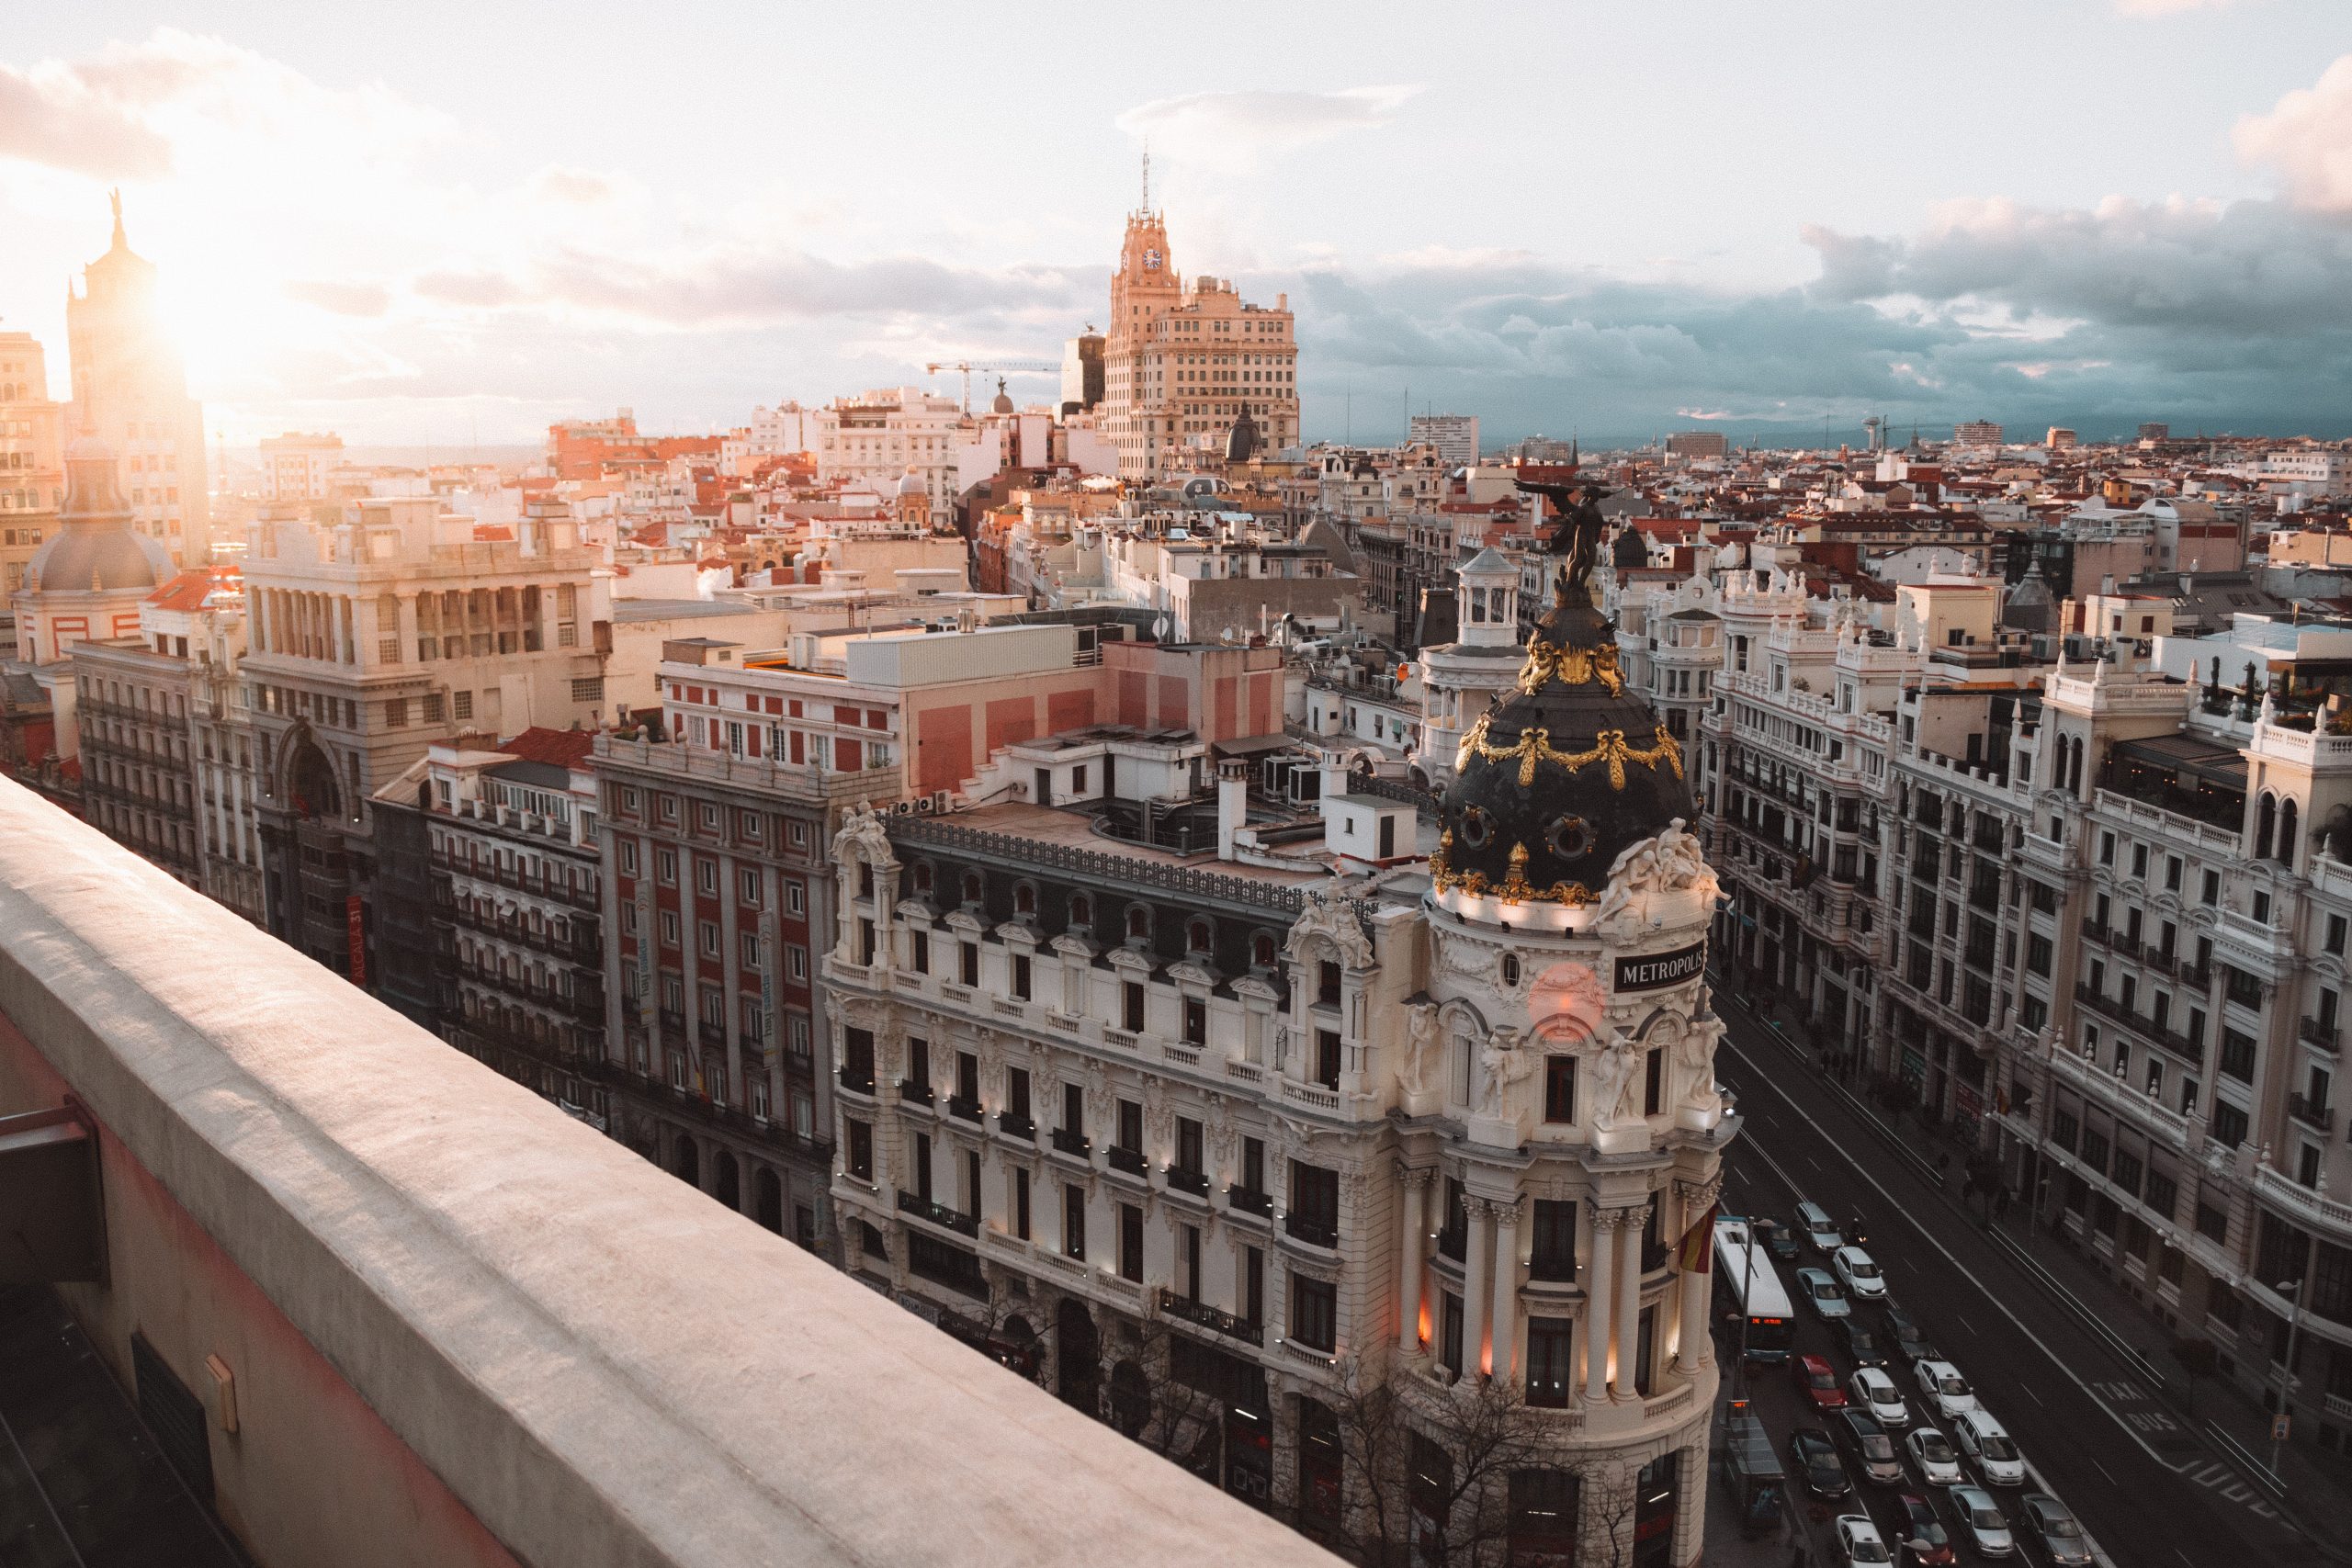 Madrid City